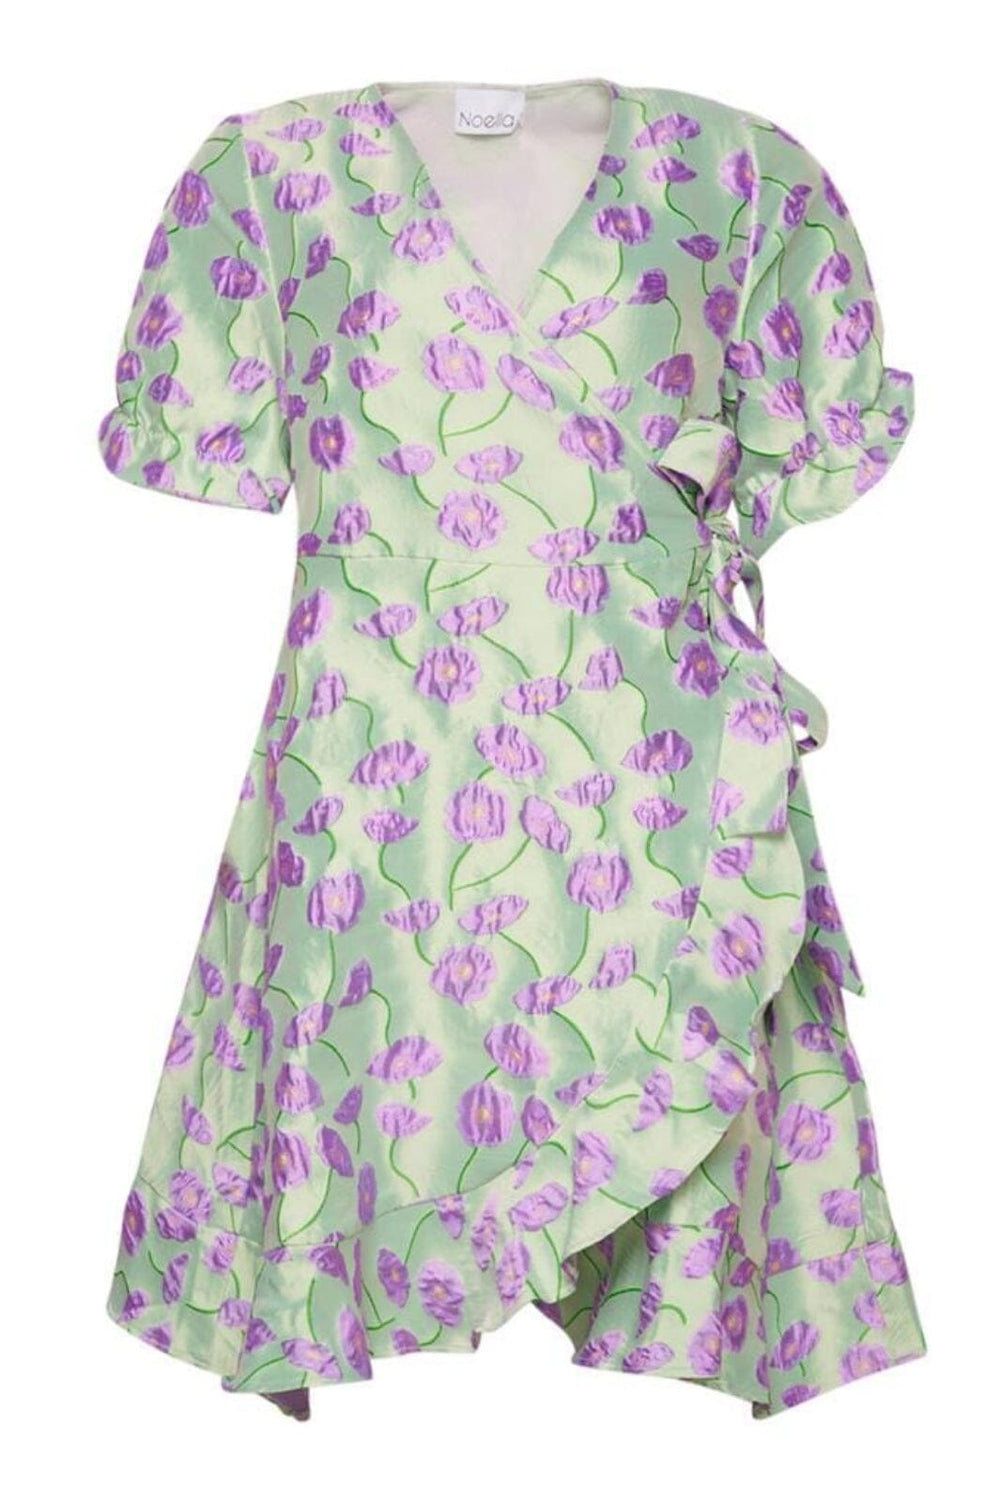 Noella - Alicante Dress - 515 Lilac Mix Kjoler 